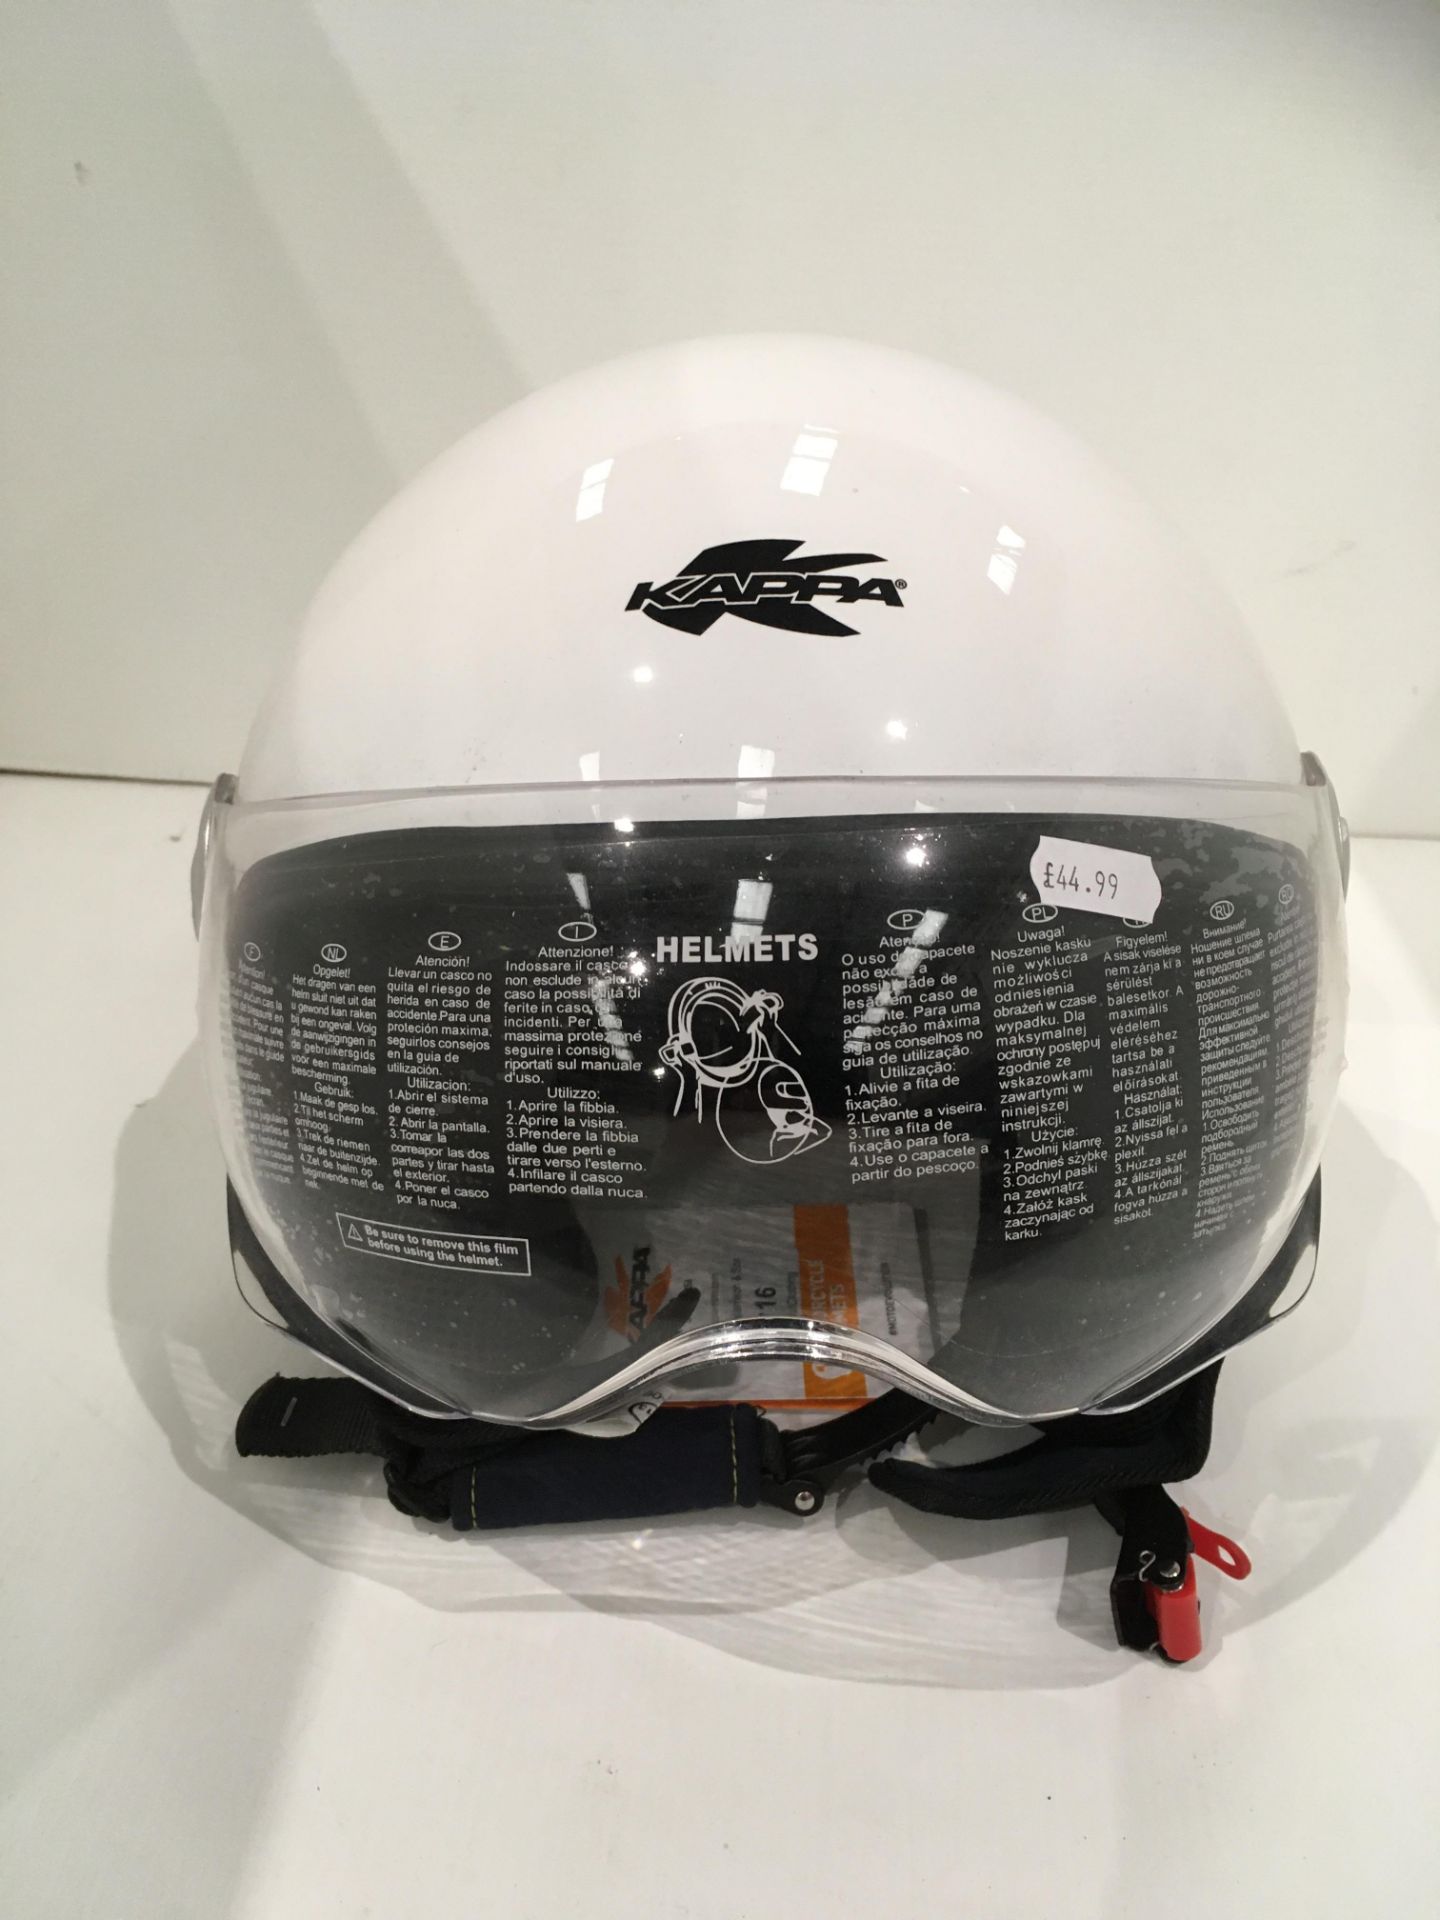 Kappa KV-20 Rio motorbike helmet in gloss white - size M (58cm)